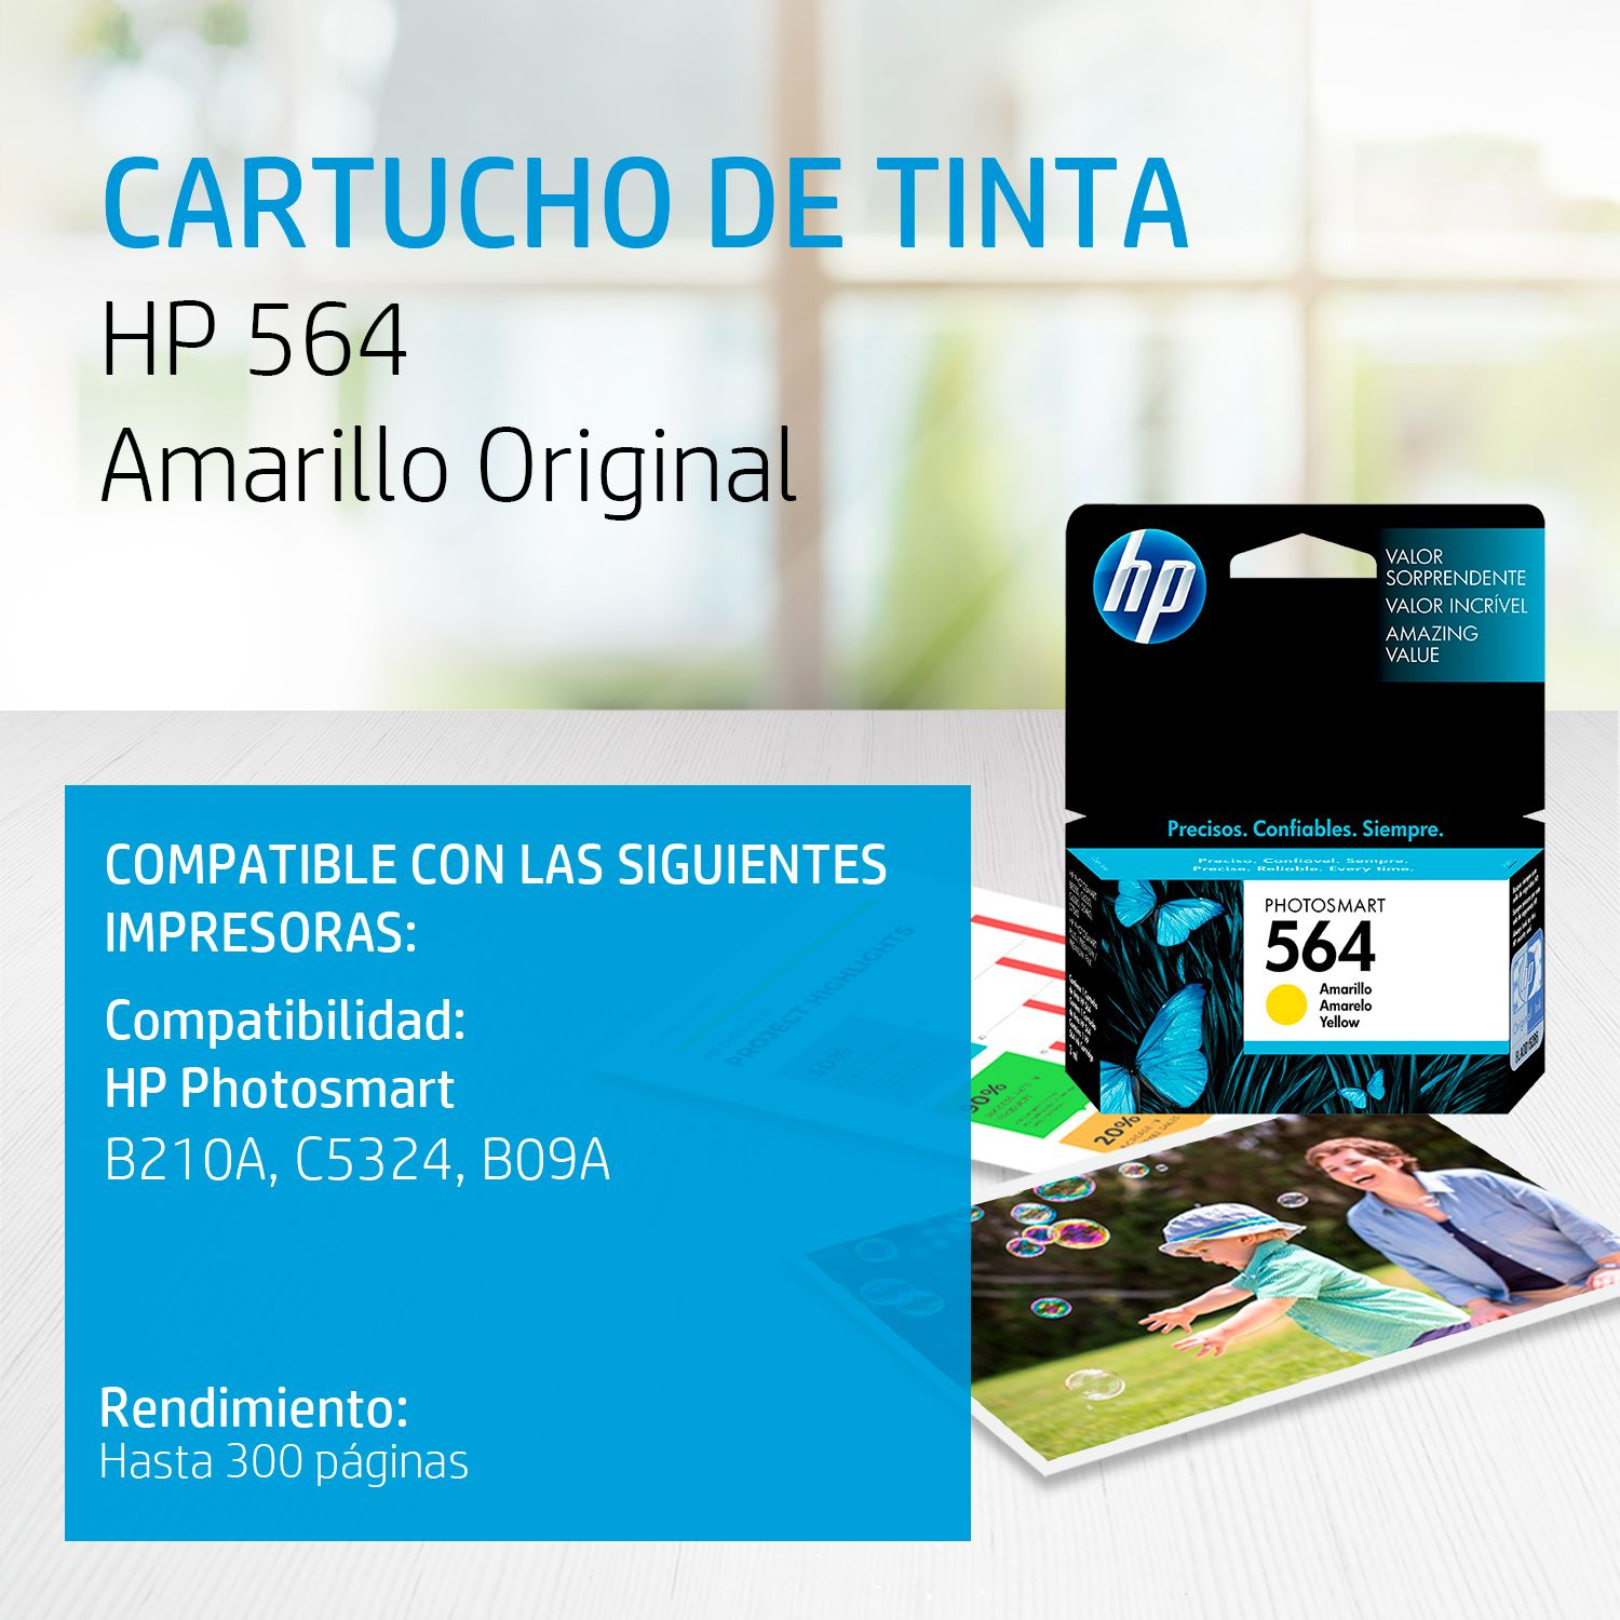 Cartucho de tinta HP 564 Yellow (CB320WL) PhotoSmart B210A/C5324/B09A 300 Pag.